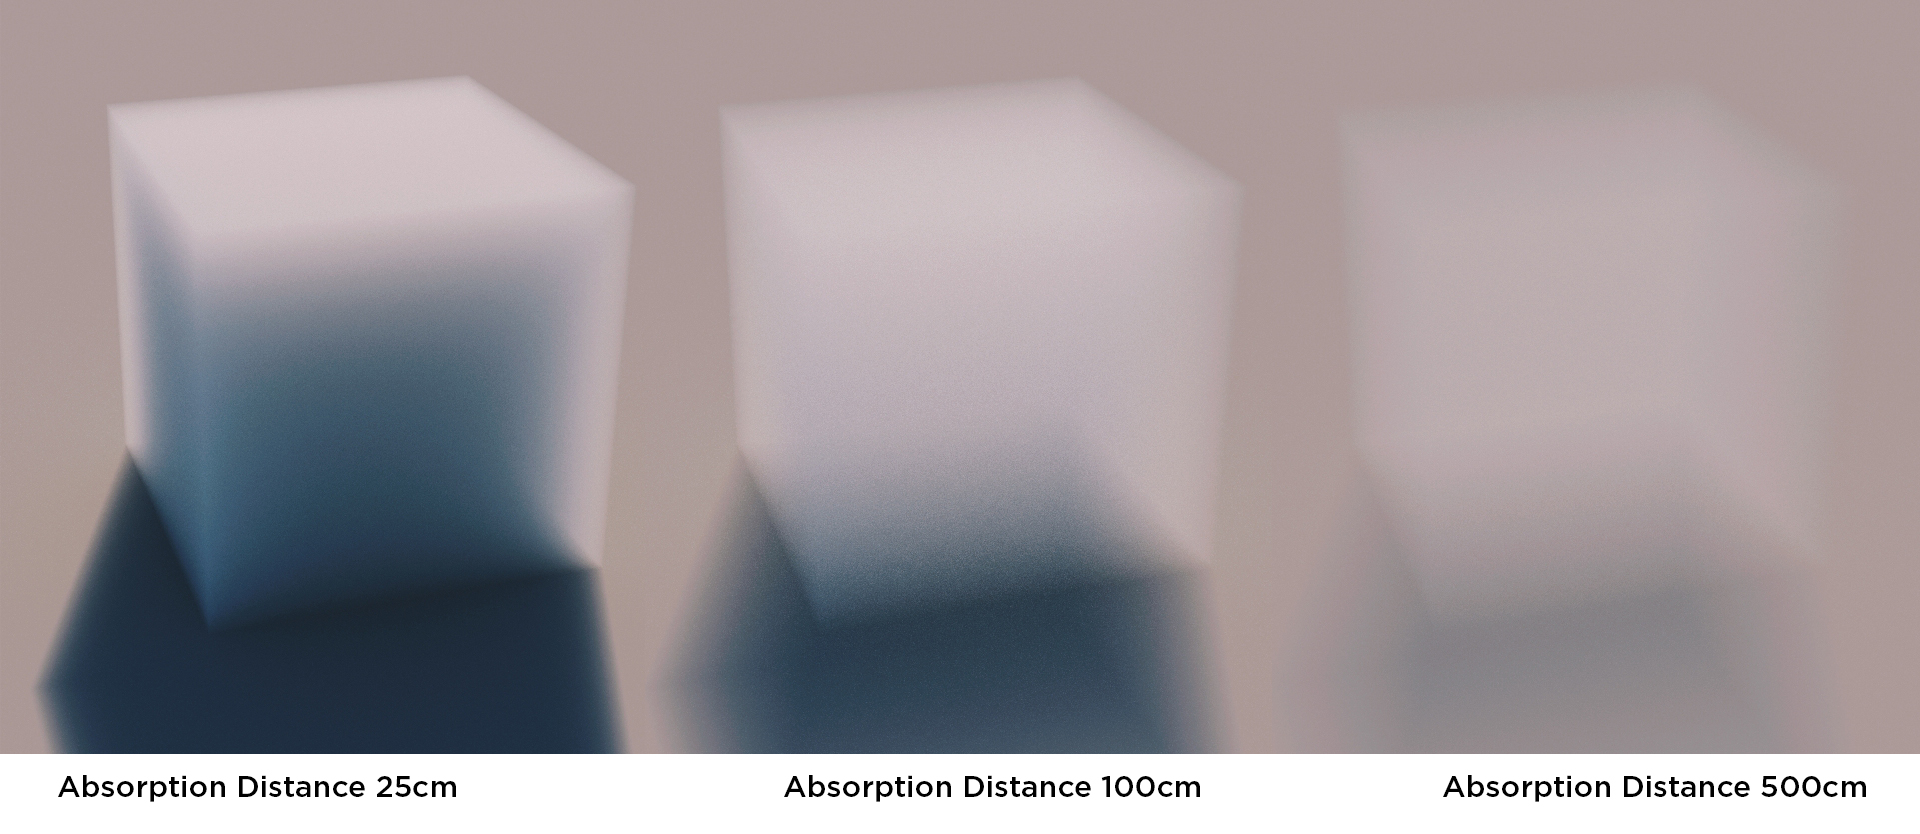 Absorption distance